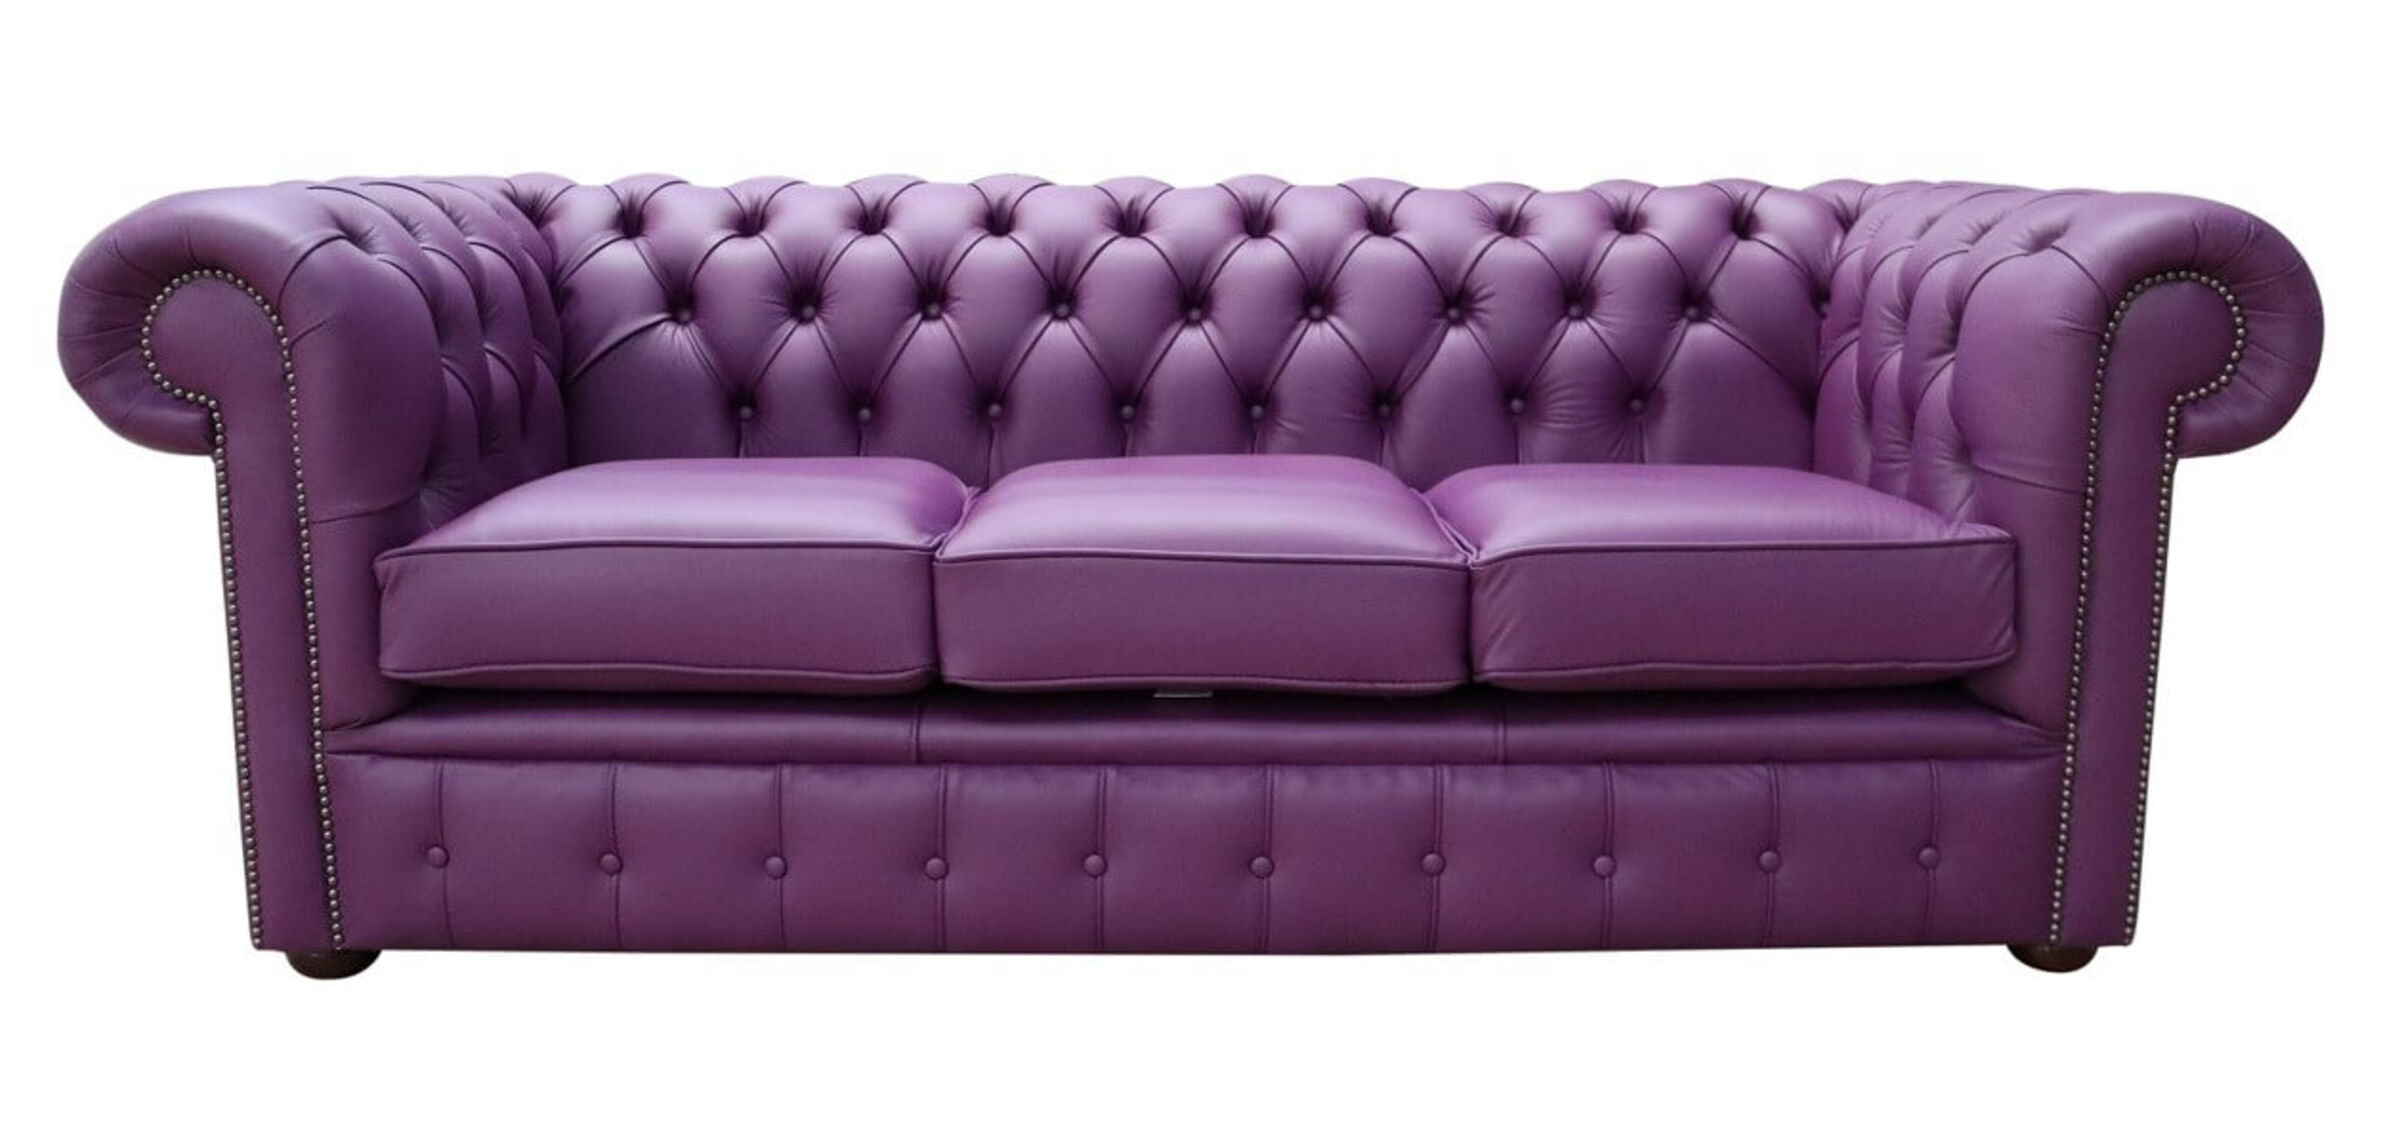 brown leather sofa purple cushions